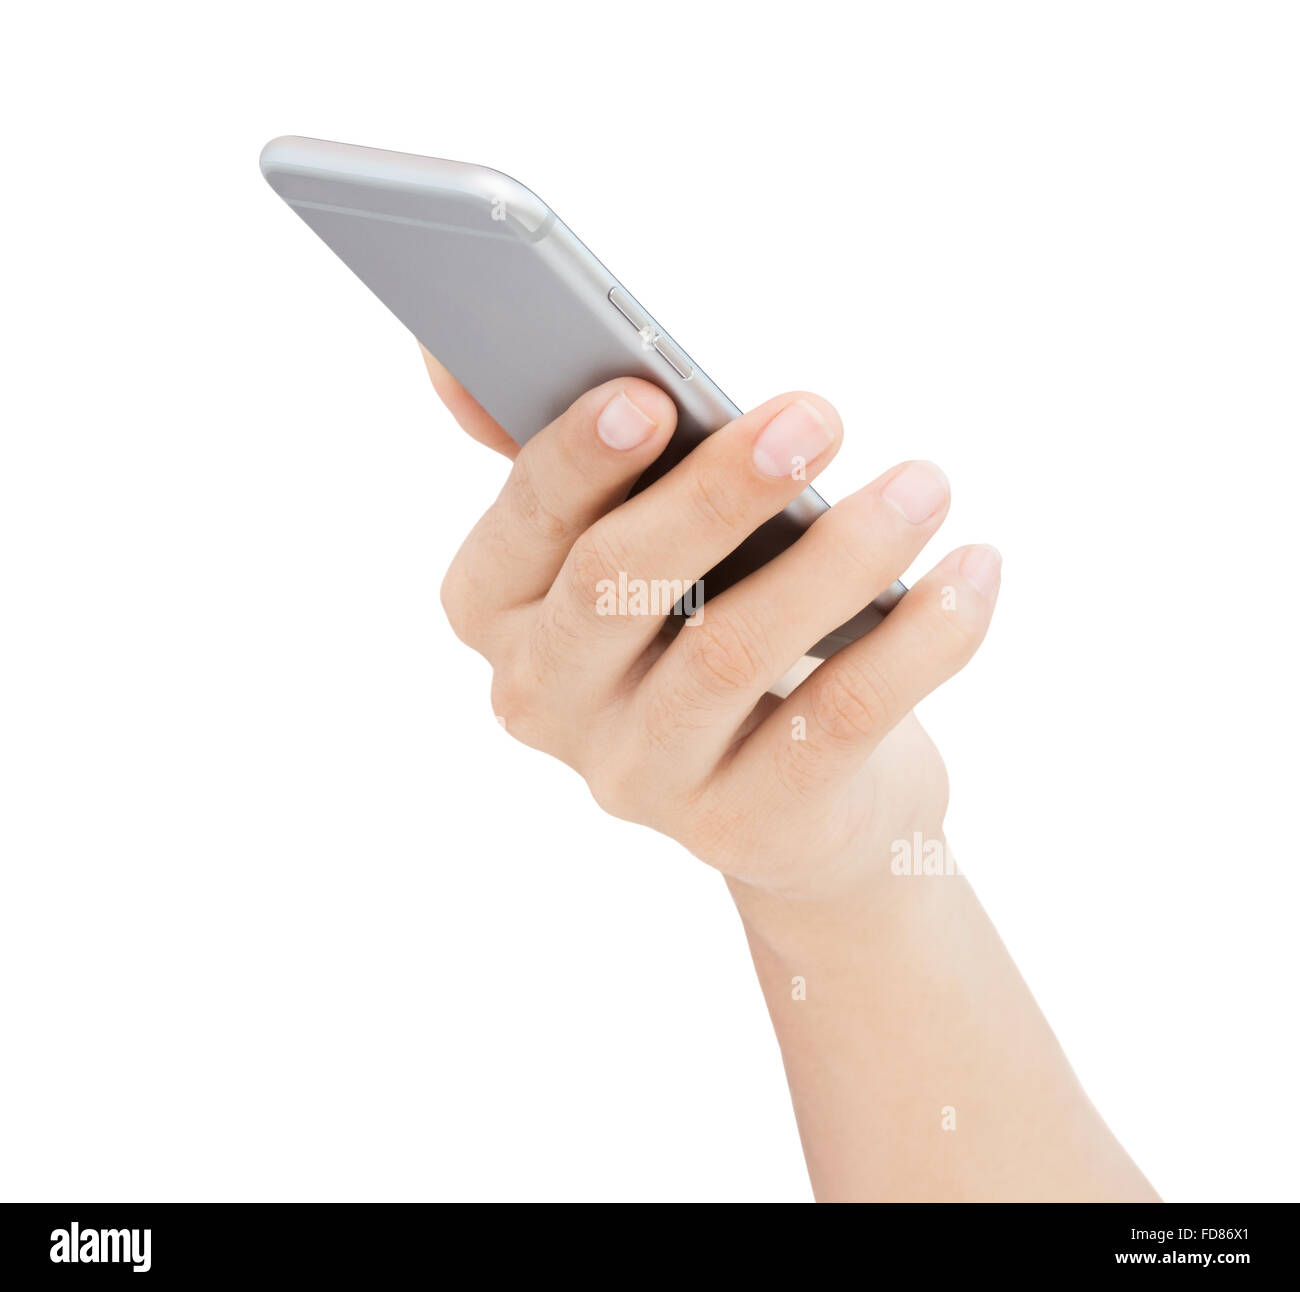 Hand holding phone on white background Stock Photo